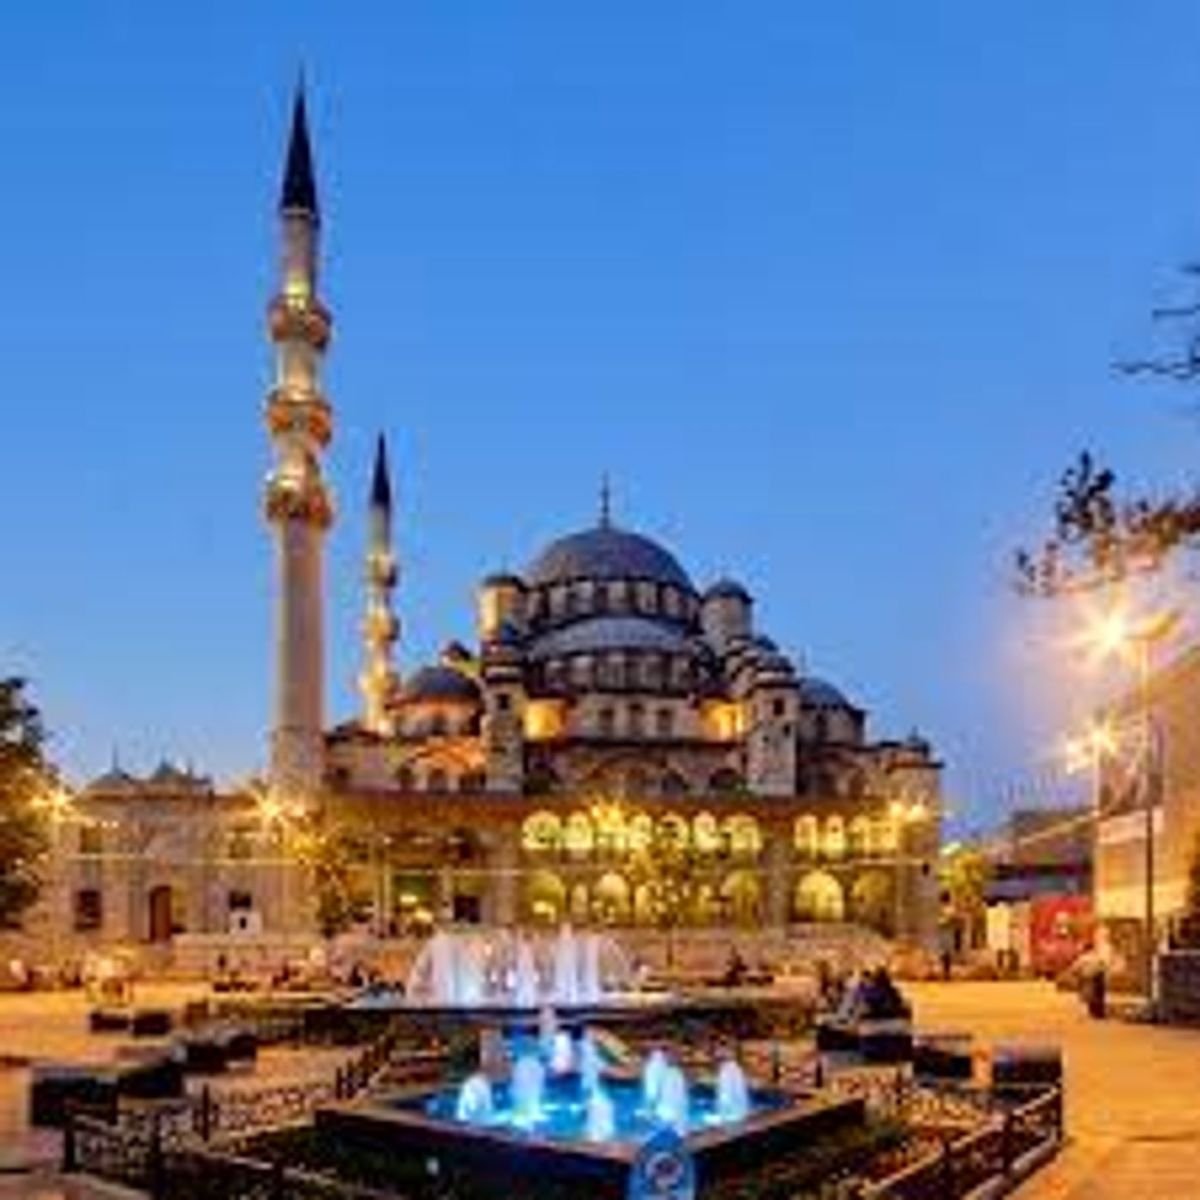 ISTANBUL TURKEY